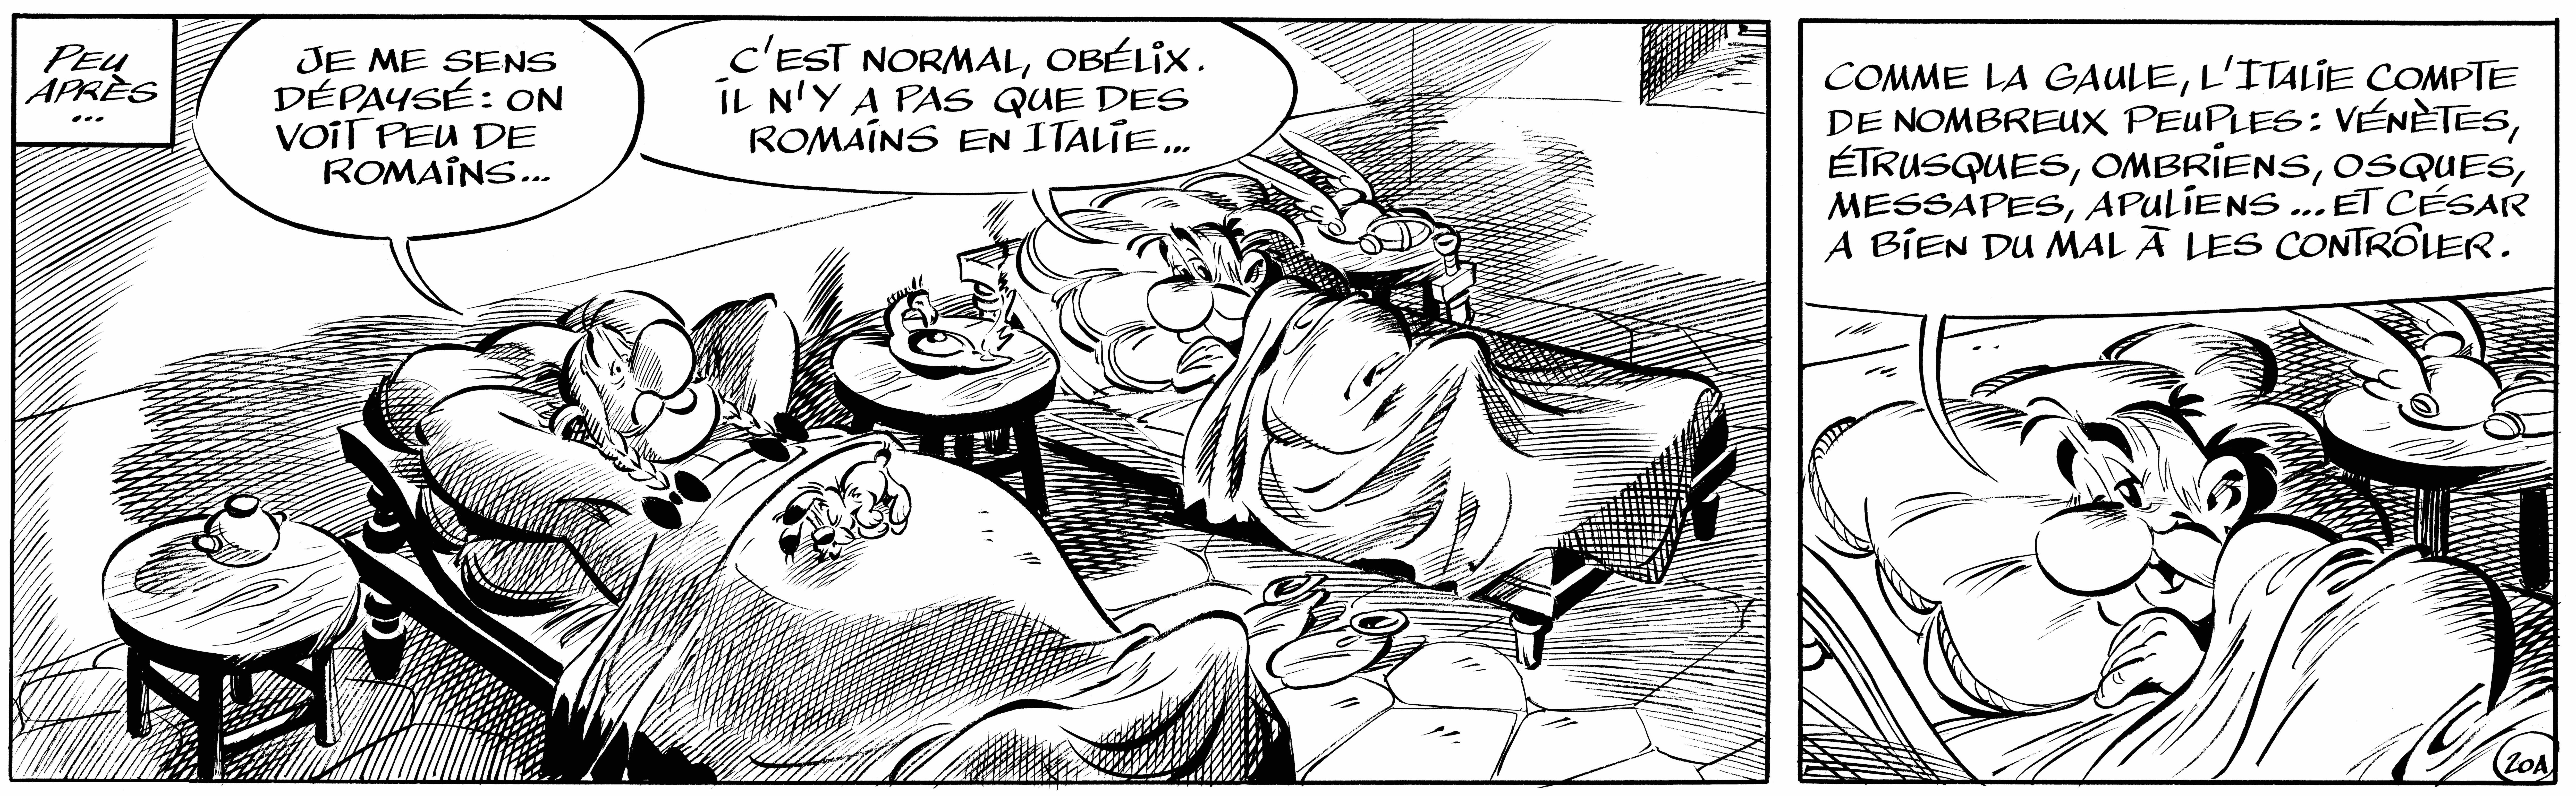 asterix_37-strip_nb_0.jpg